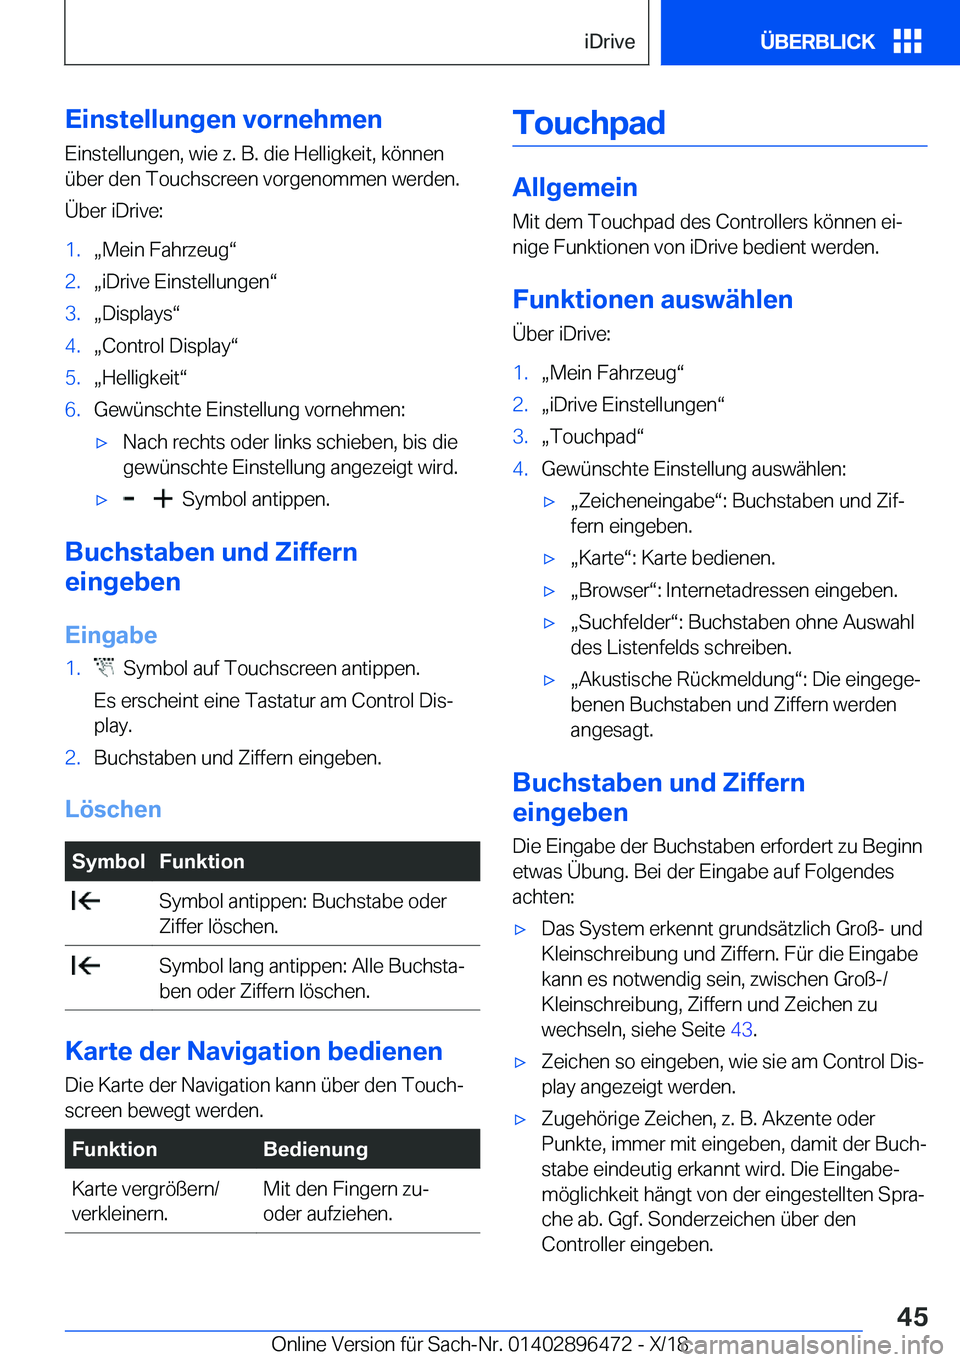 BMW X1 2019  Betriebsanleitungen (in German) �E�i�n�s�t�e�l�l�u�n�g�e�n��v�o�r�n�e�h�m�e�n�E�i�n�s�t�e�l�l�u�n�g�e�n�,��w�i�e��z�.��B�.��d�i�e��H�e�l�l�i�g�k�e�i�t�,��k�